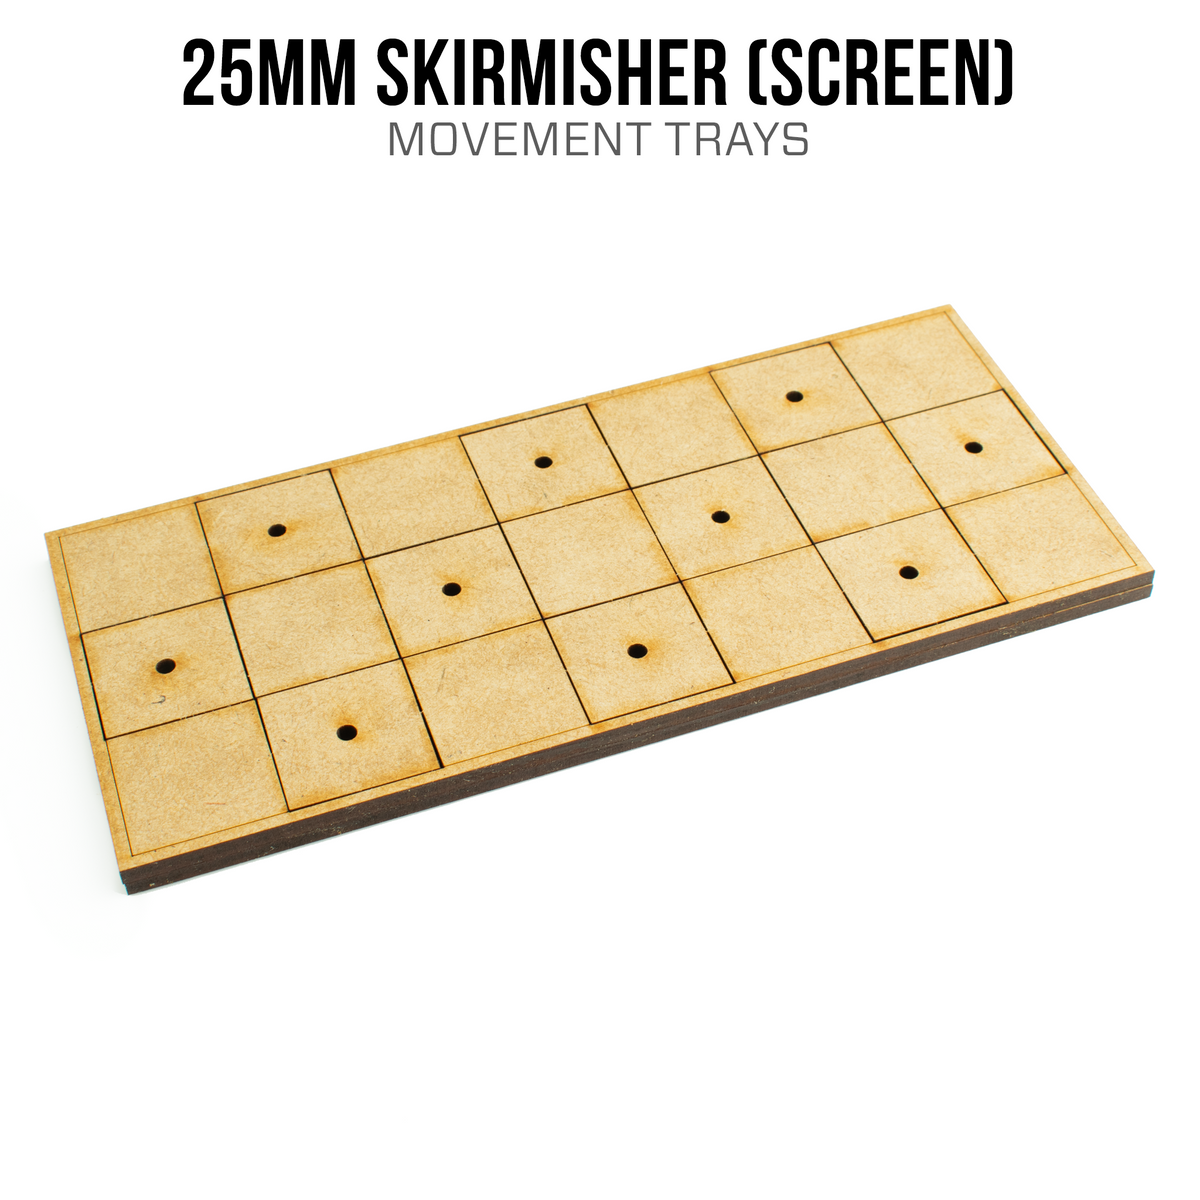 25mm Skirmisher (Screen) Movement Trays